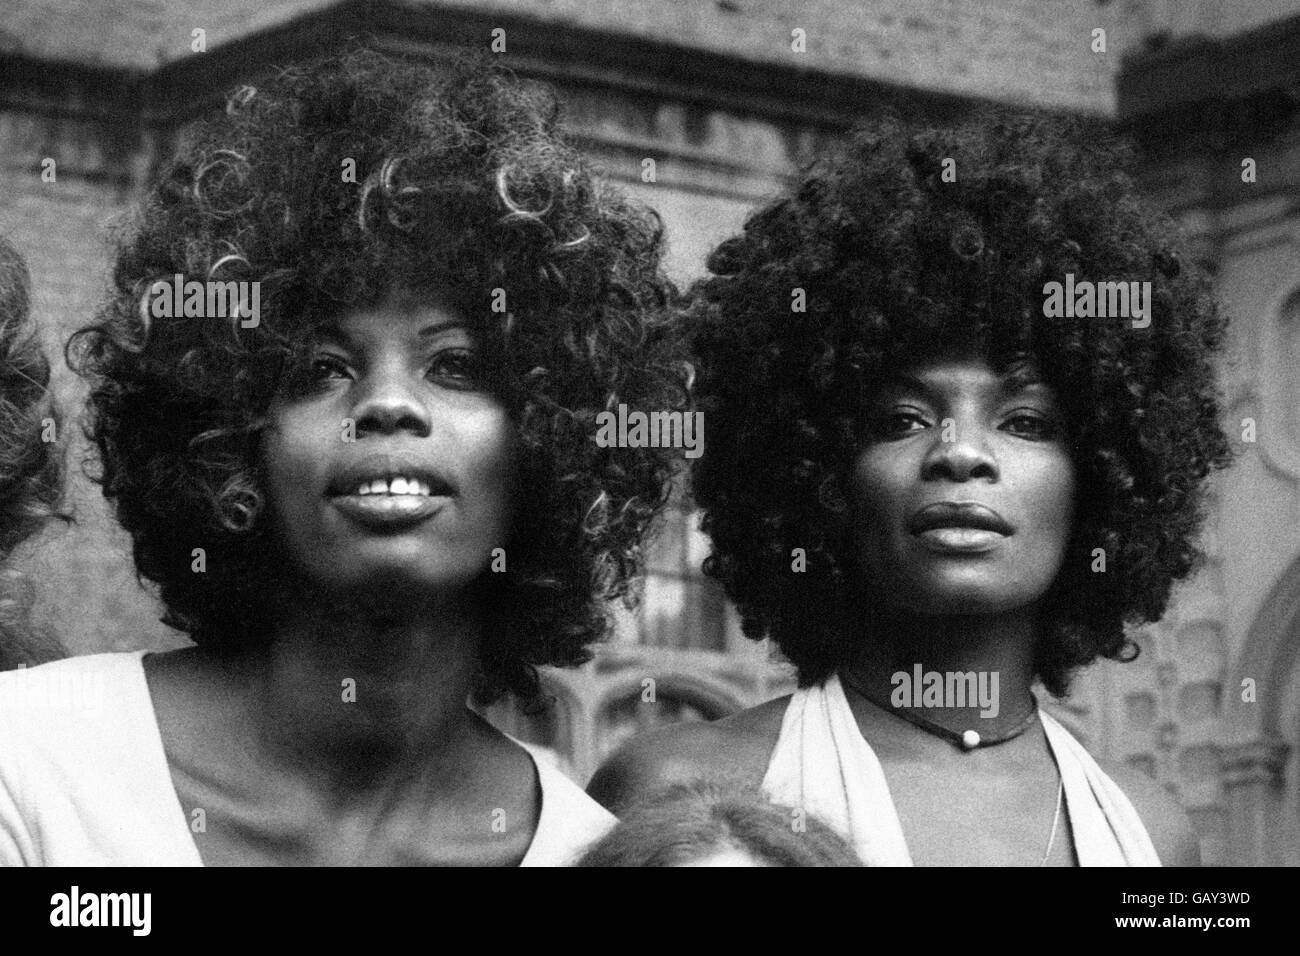 Hairstyles - 1970's Stock Photo